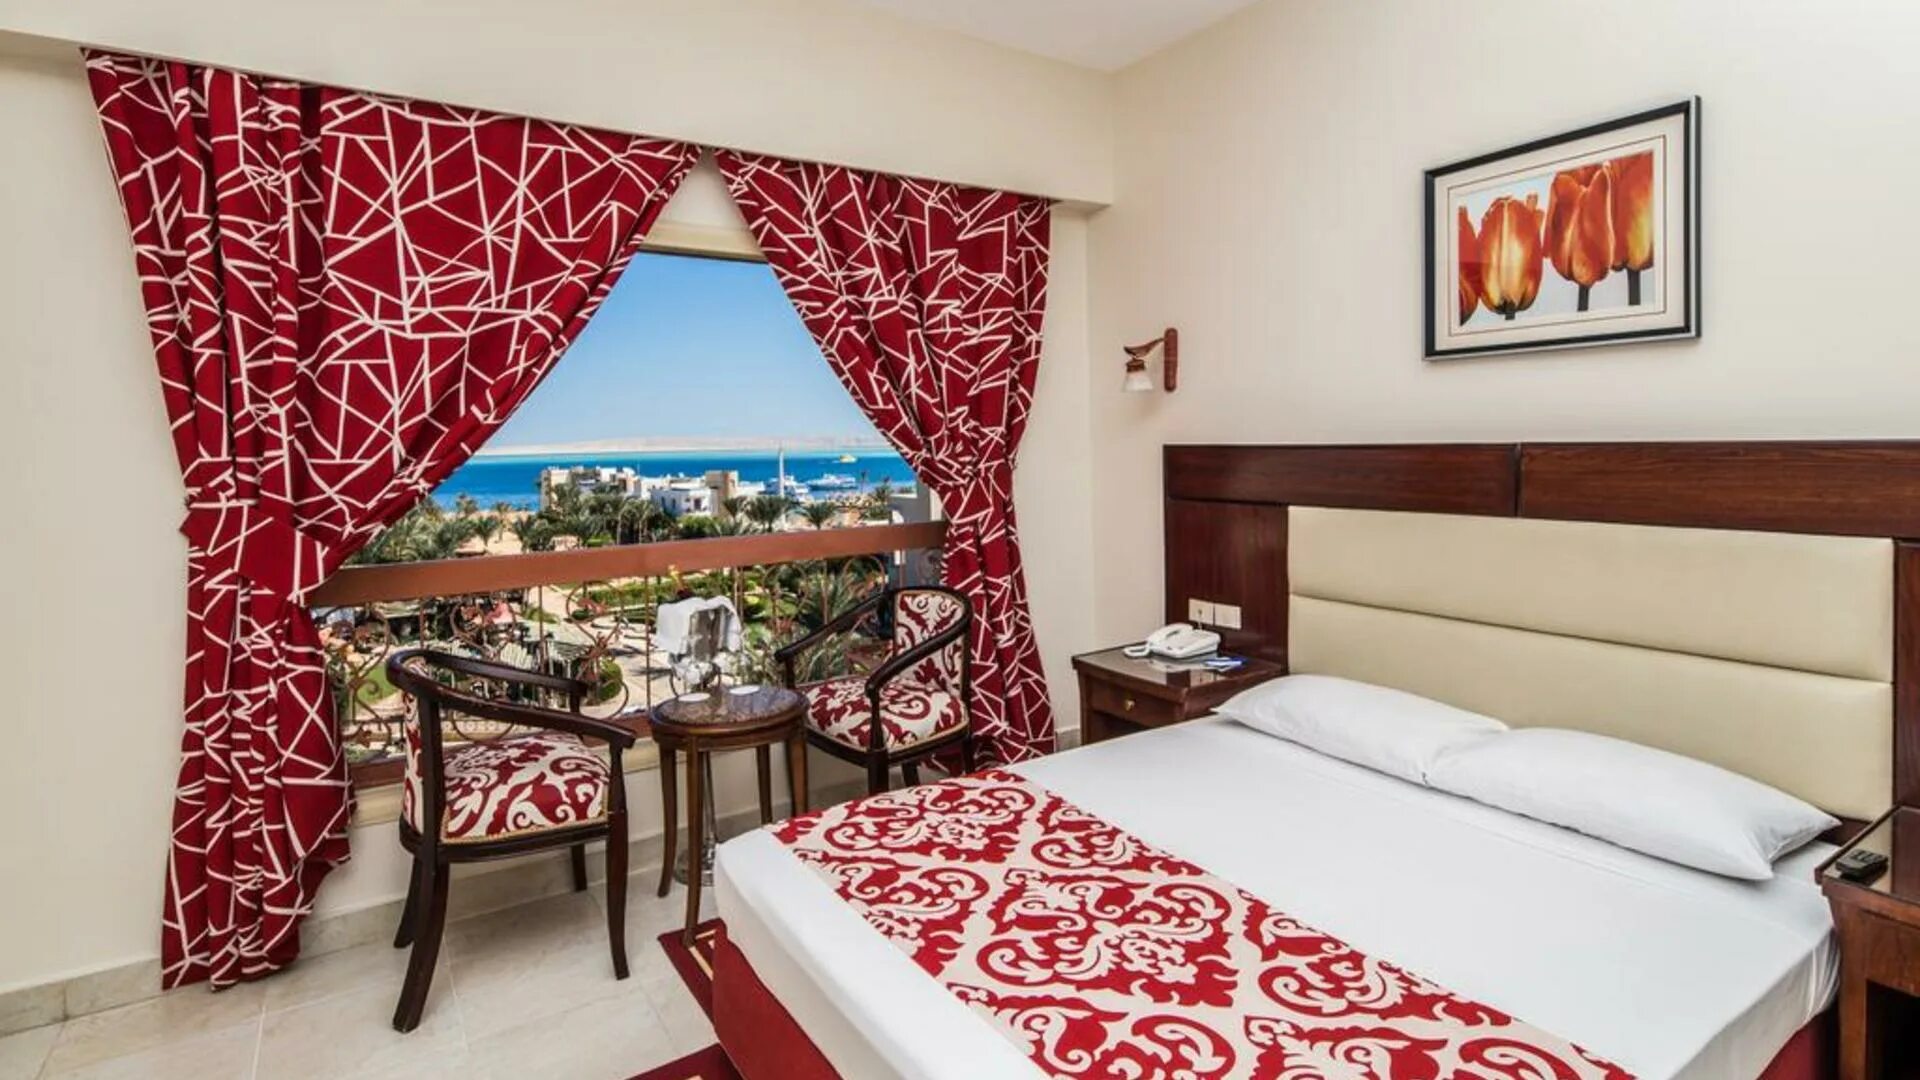 Отель Seagull Beach Resort 4*. Seagull Beach Resort Hurghada 4. Sea Gull Hotel 4 Египет. Отель в Египте Seagull Beach Resort Club 4.